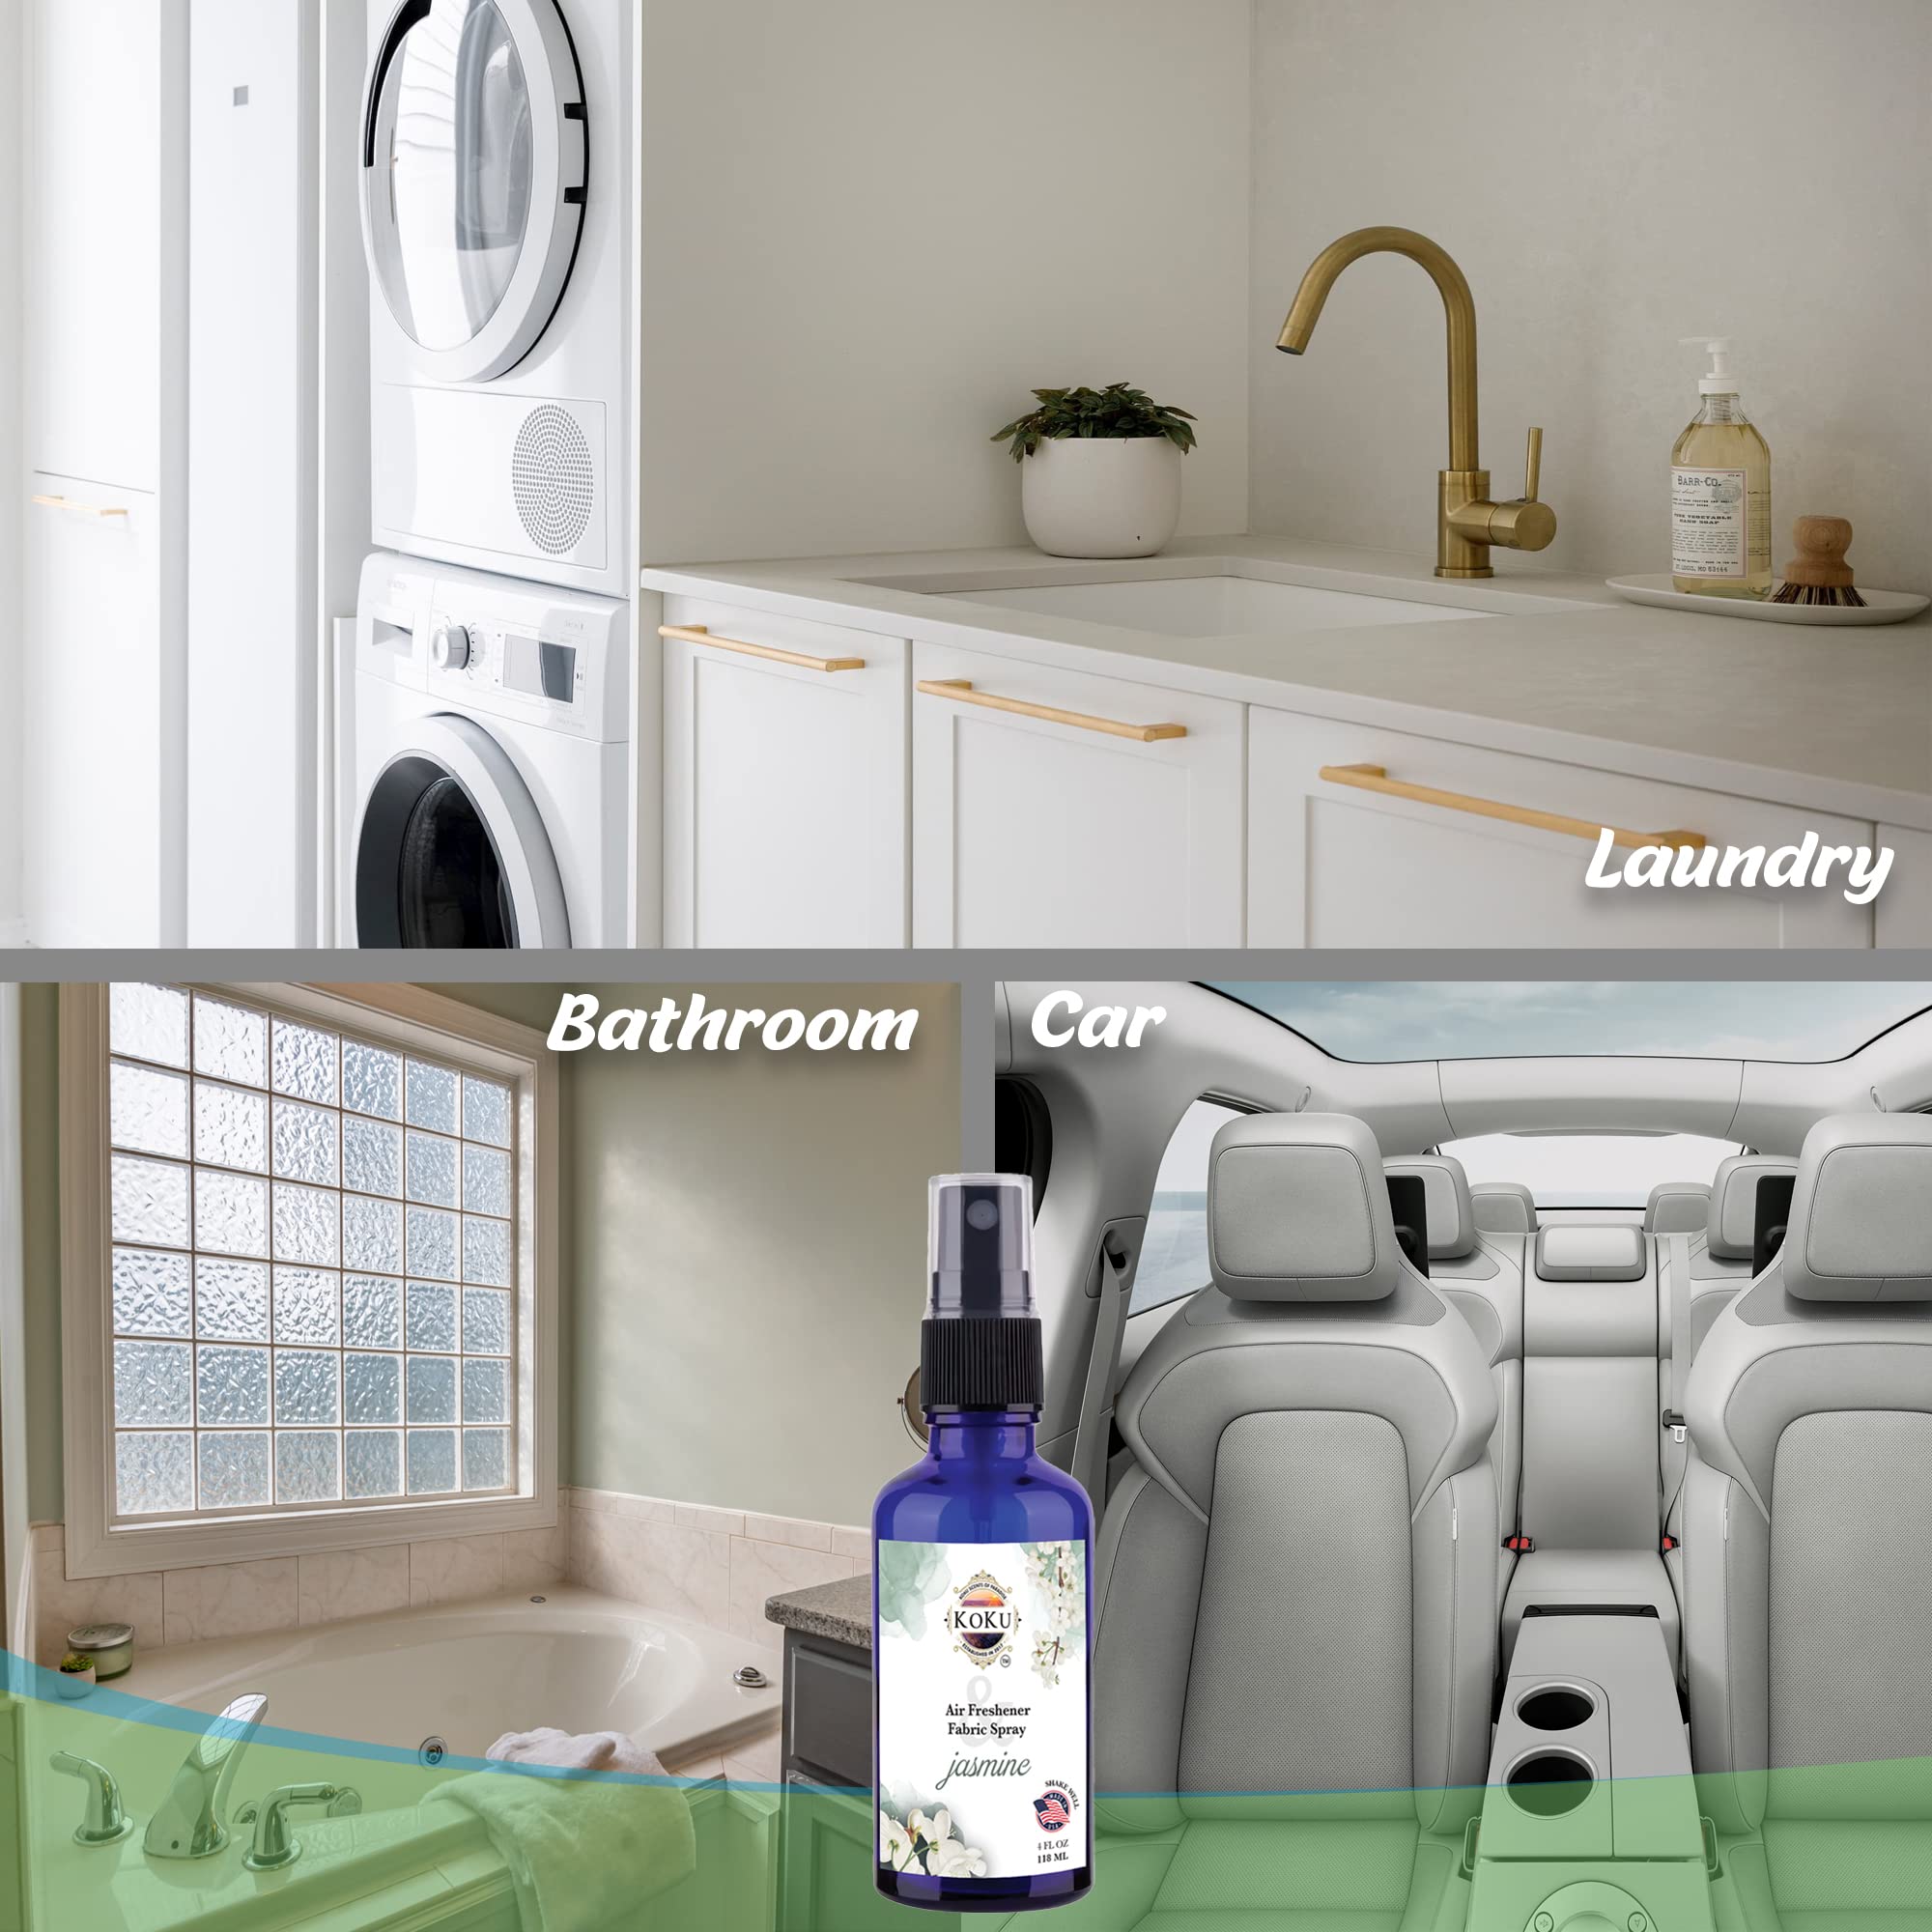 Jasmine Air Freshener - Room Spray - Odor Eliminator - Deodorizer - Car Air Freshener - Home Spray - Linen Spray - Fabric Refresher - Non-Toxic - Alcohol Free – 4 Oz